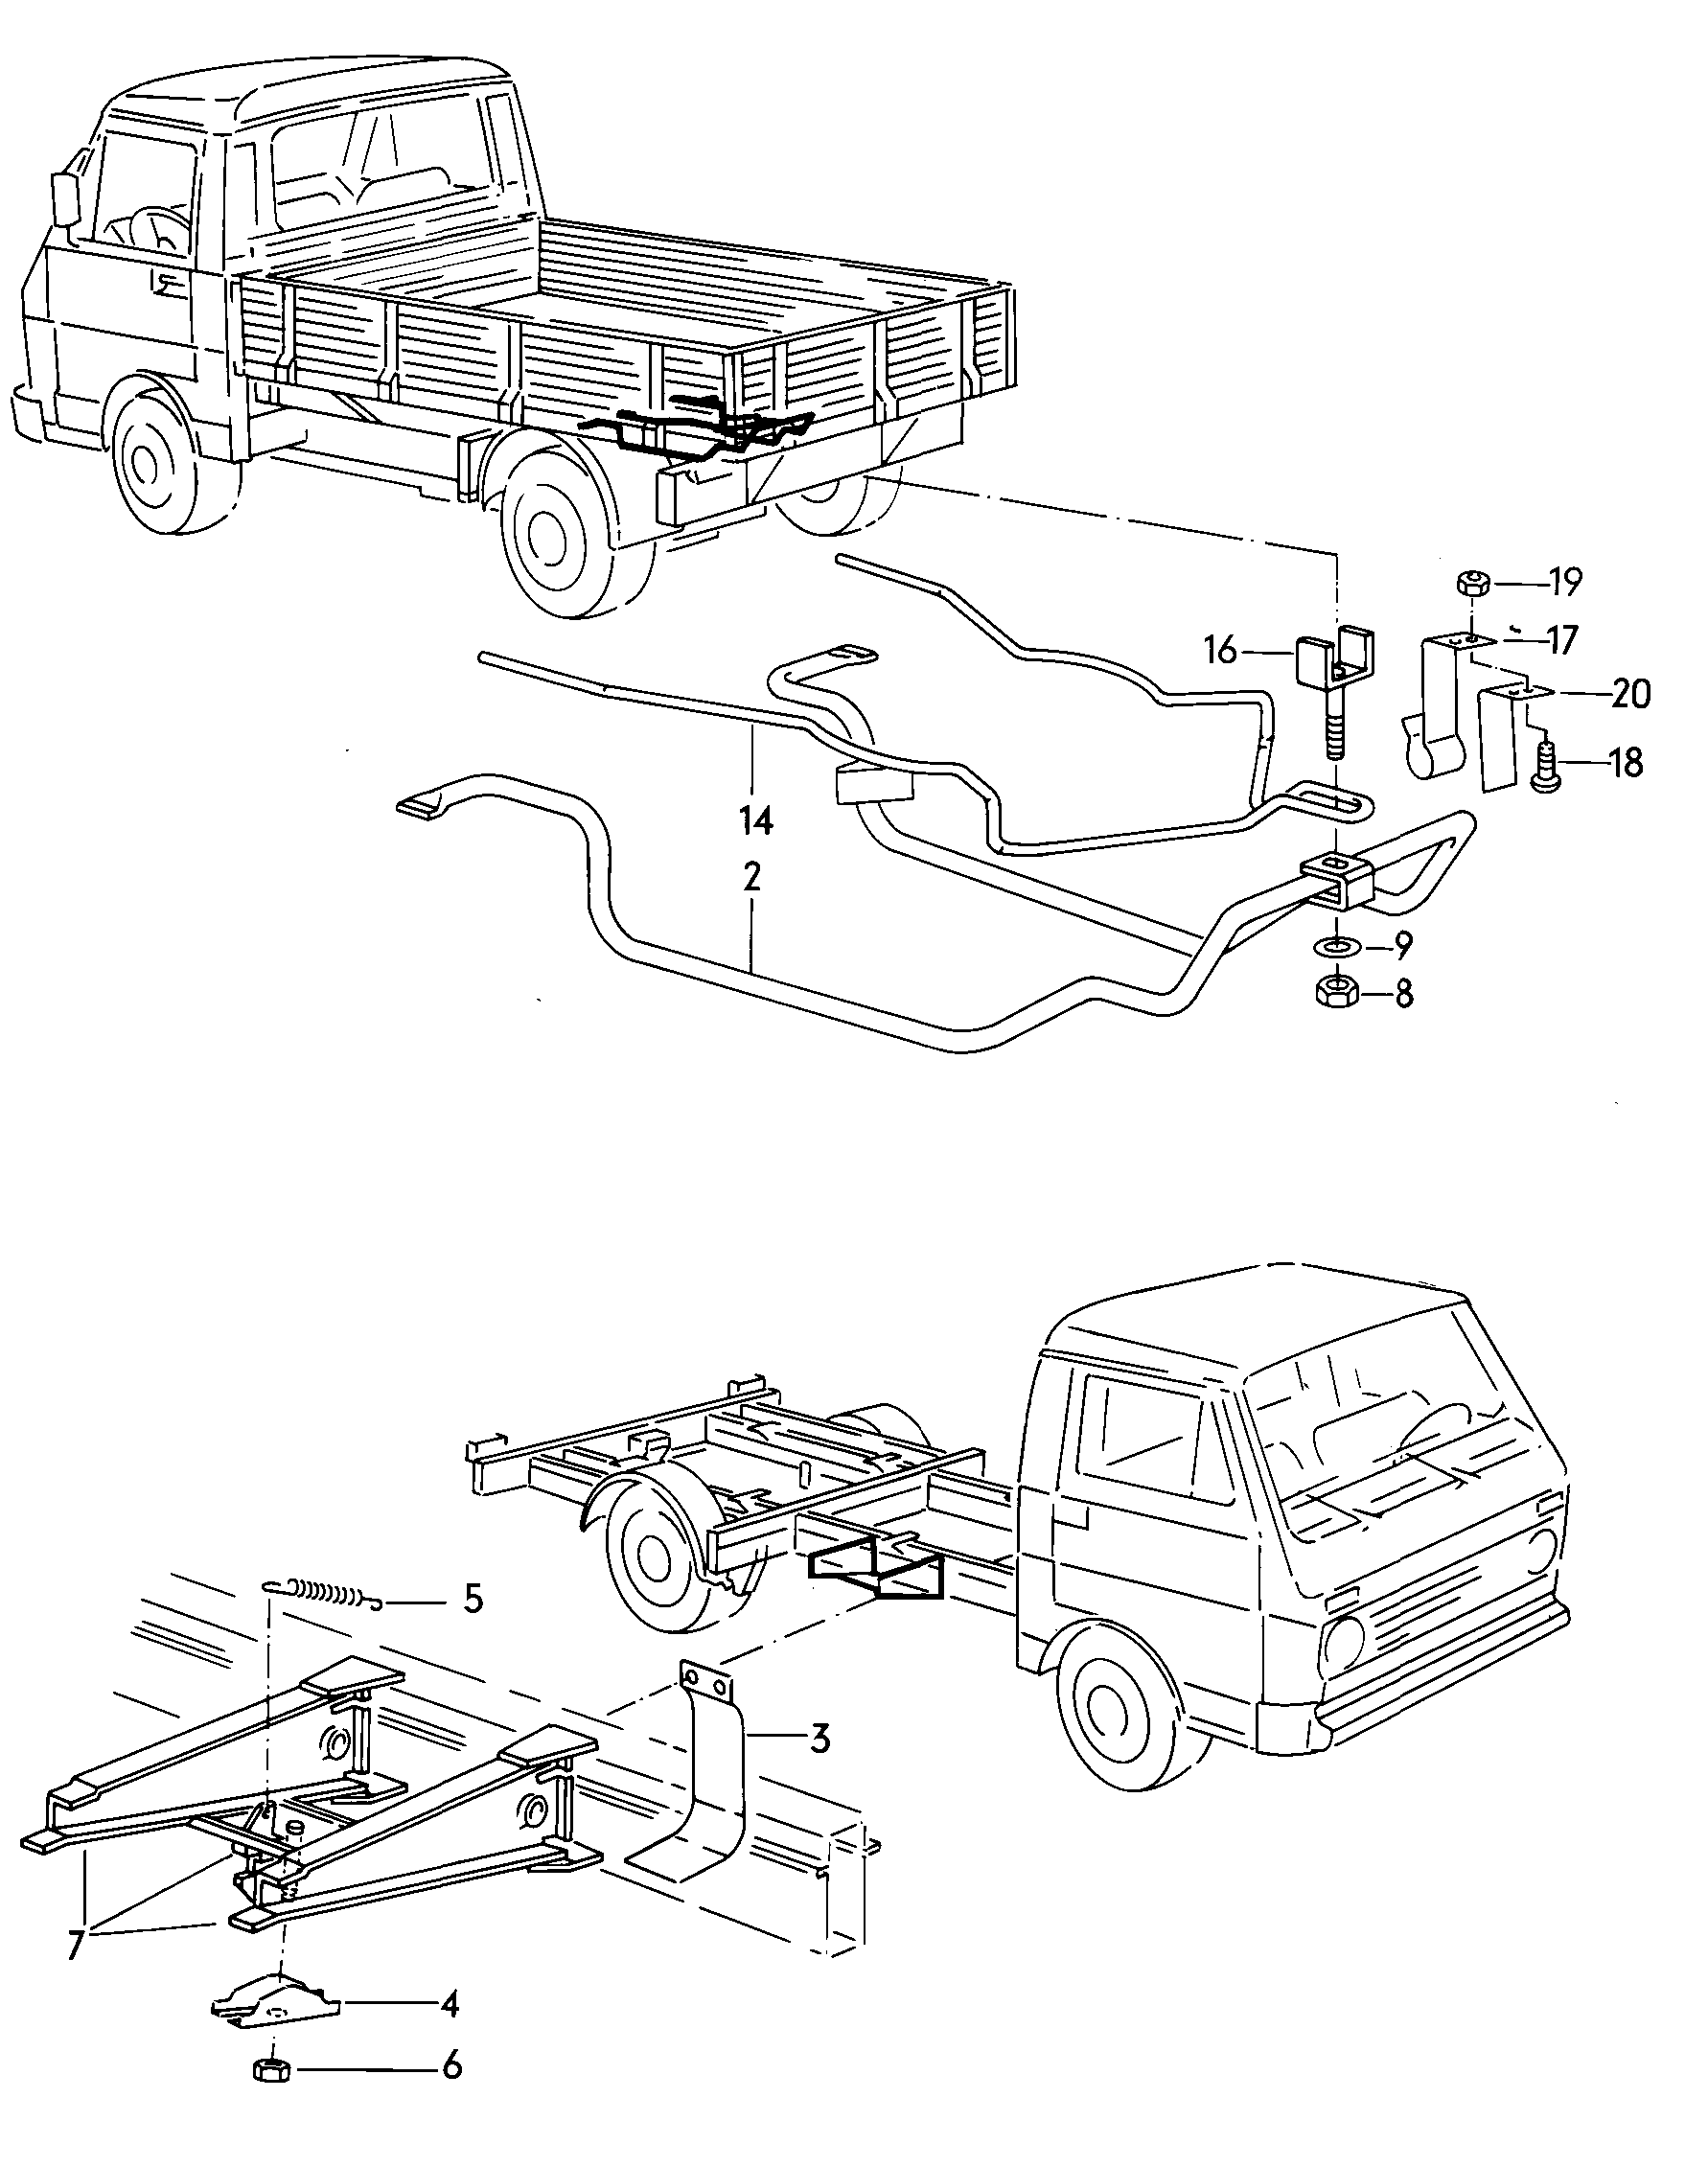 fijacion rueda repuesto camionetachasis con<br>cabina - LT, LT 4x4 - lt